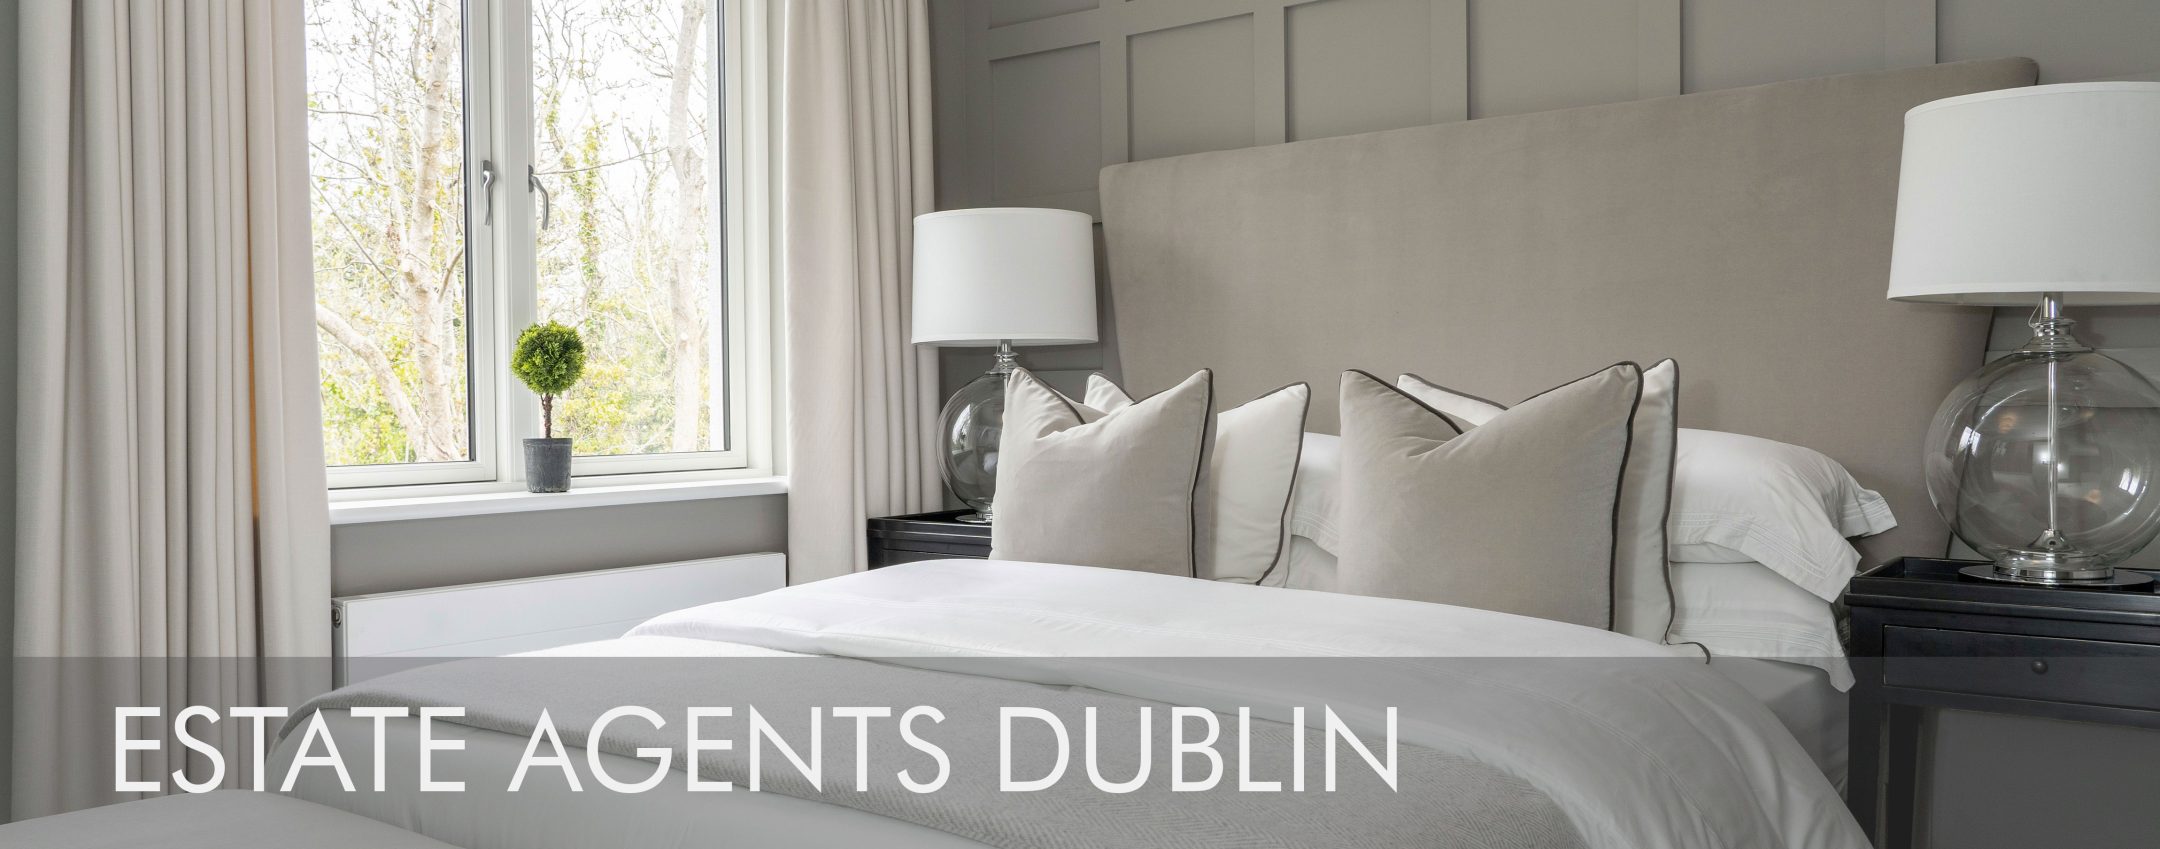 Estate Agents Dublin